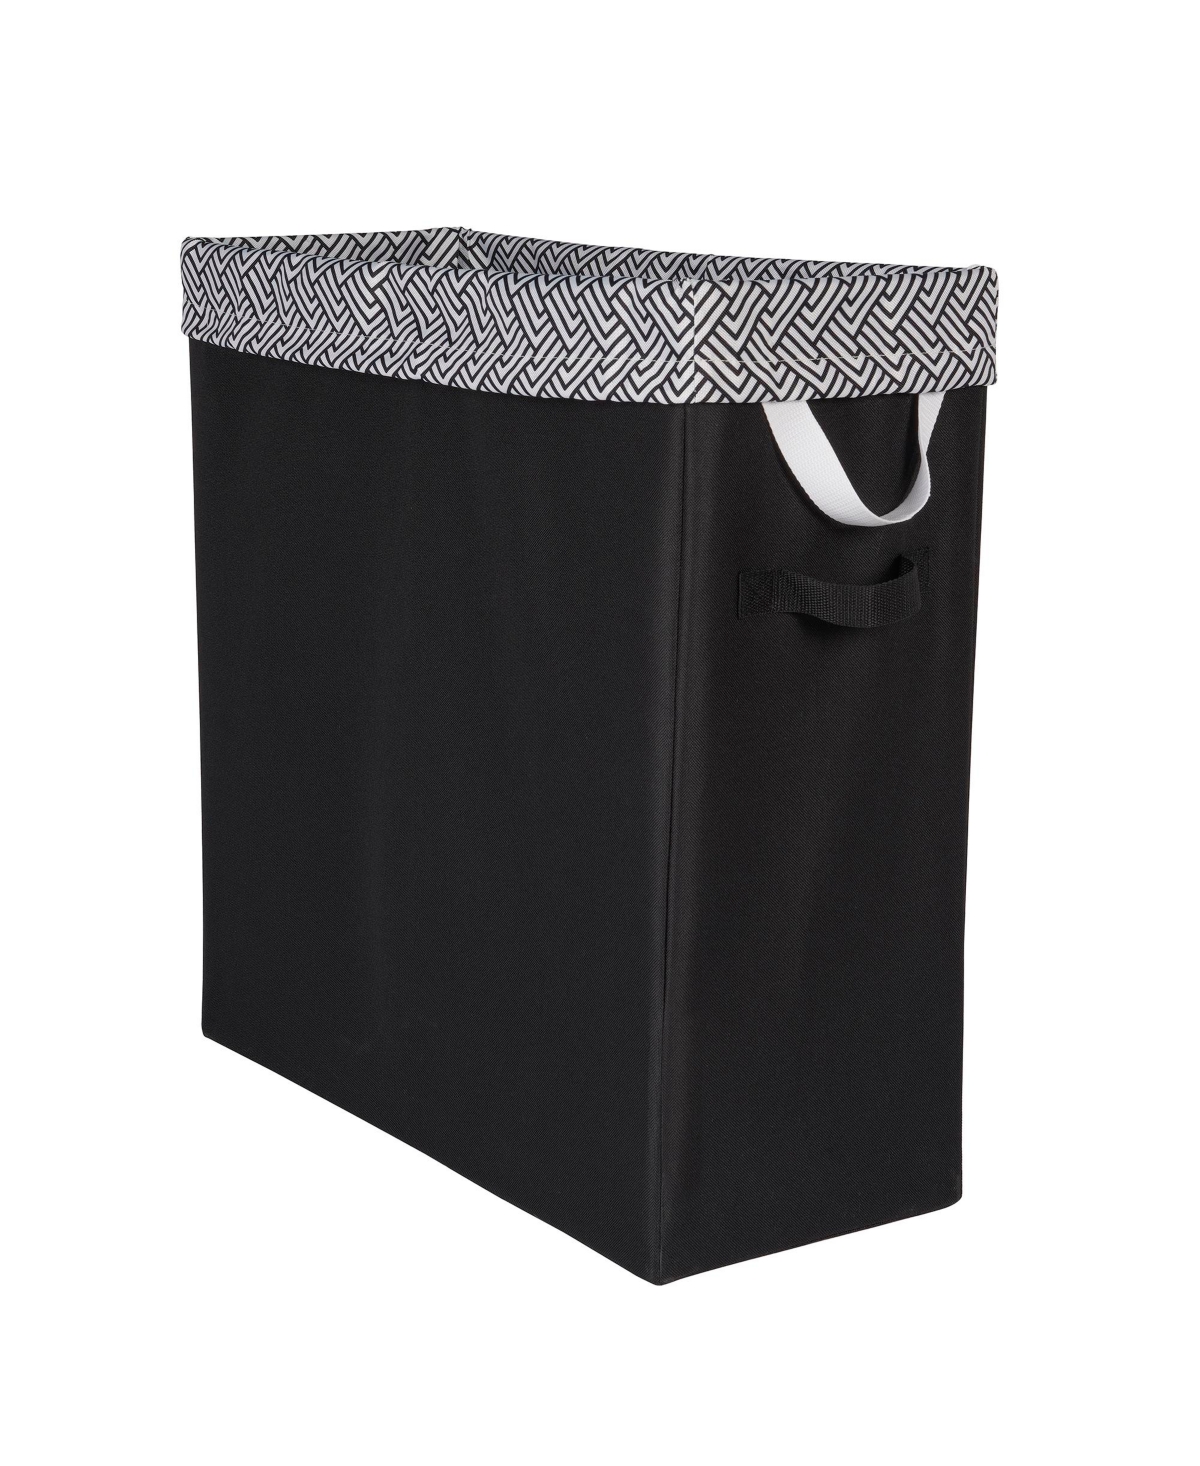 Slim Laundry Hamper with Removable Bag - Black